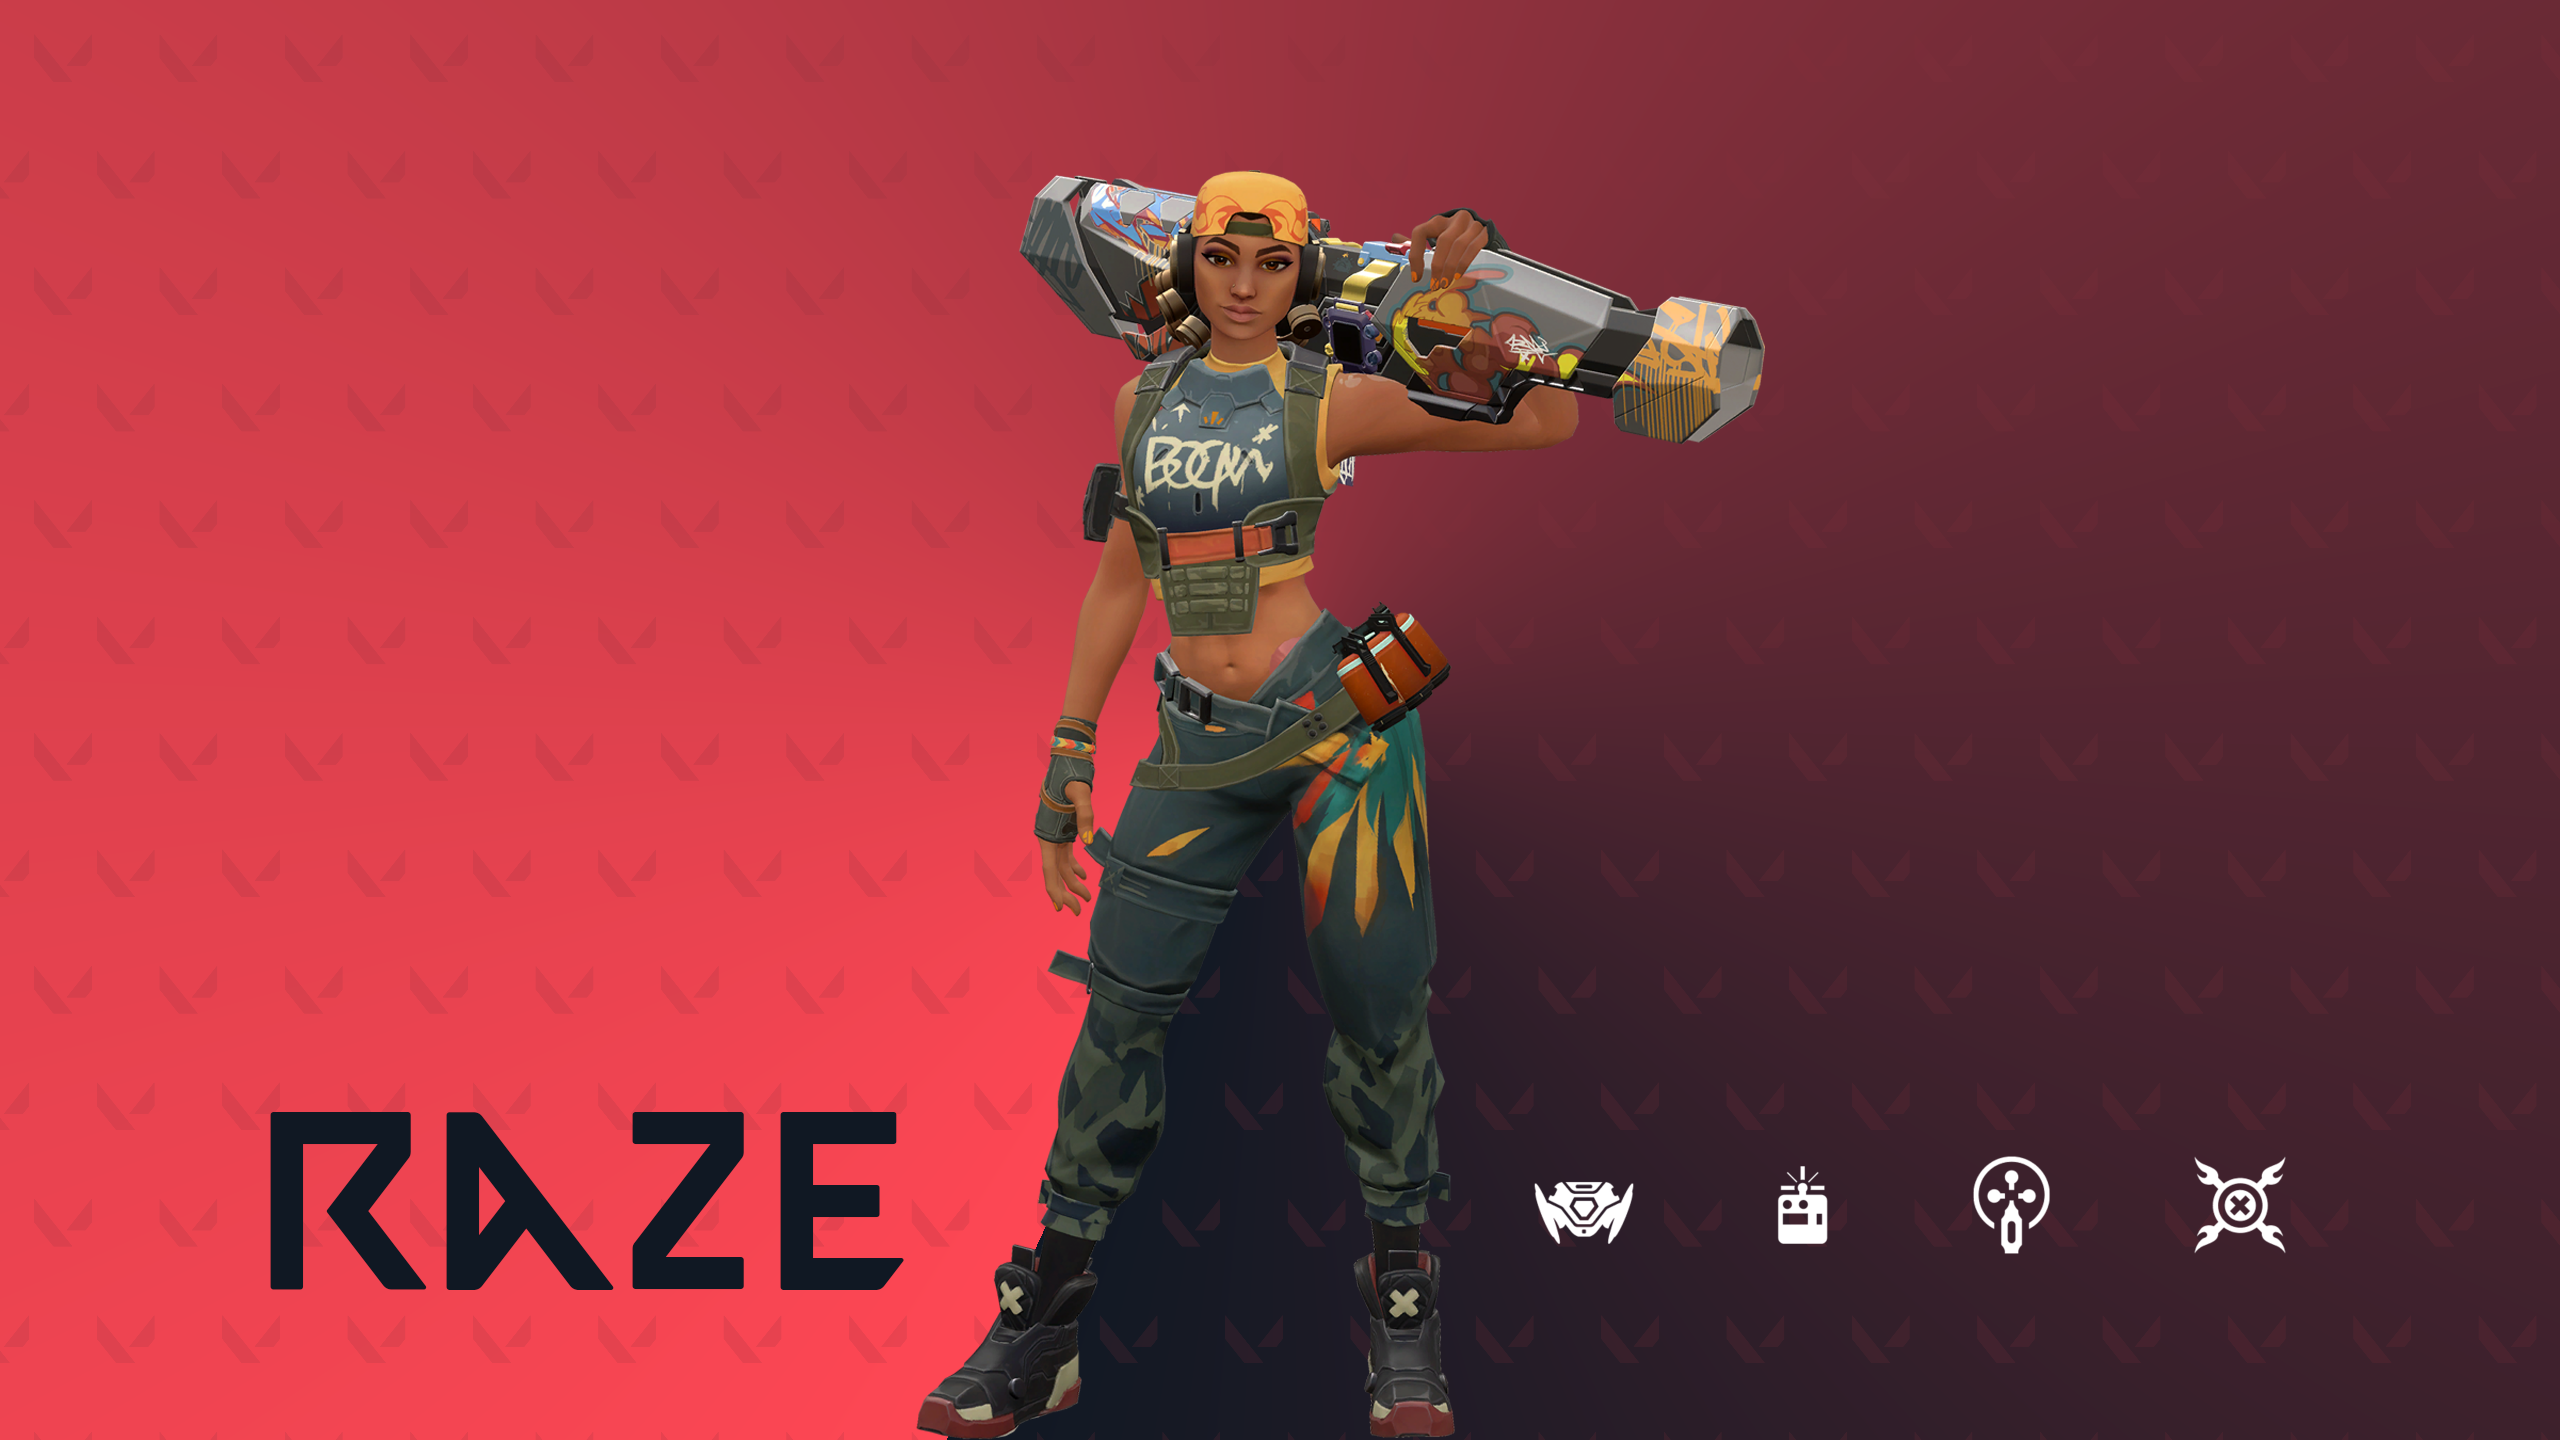 Raze Valorant - Wallpaper Android  Favorite character, Wallpaper, Android  wallpaper